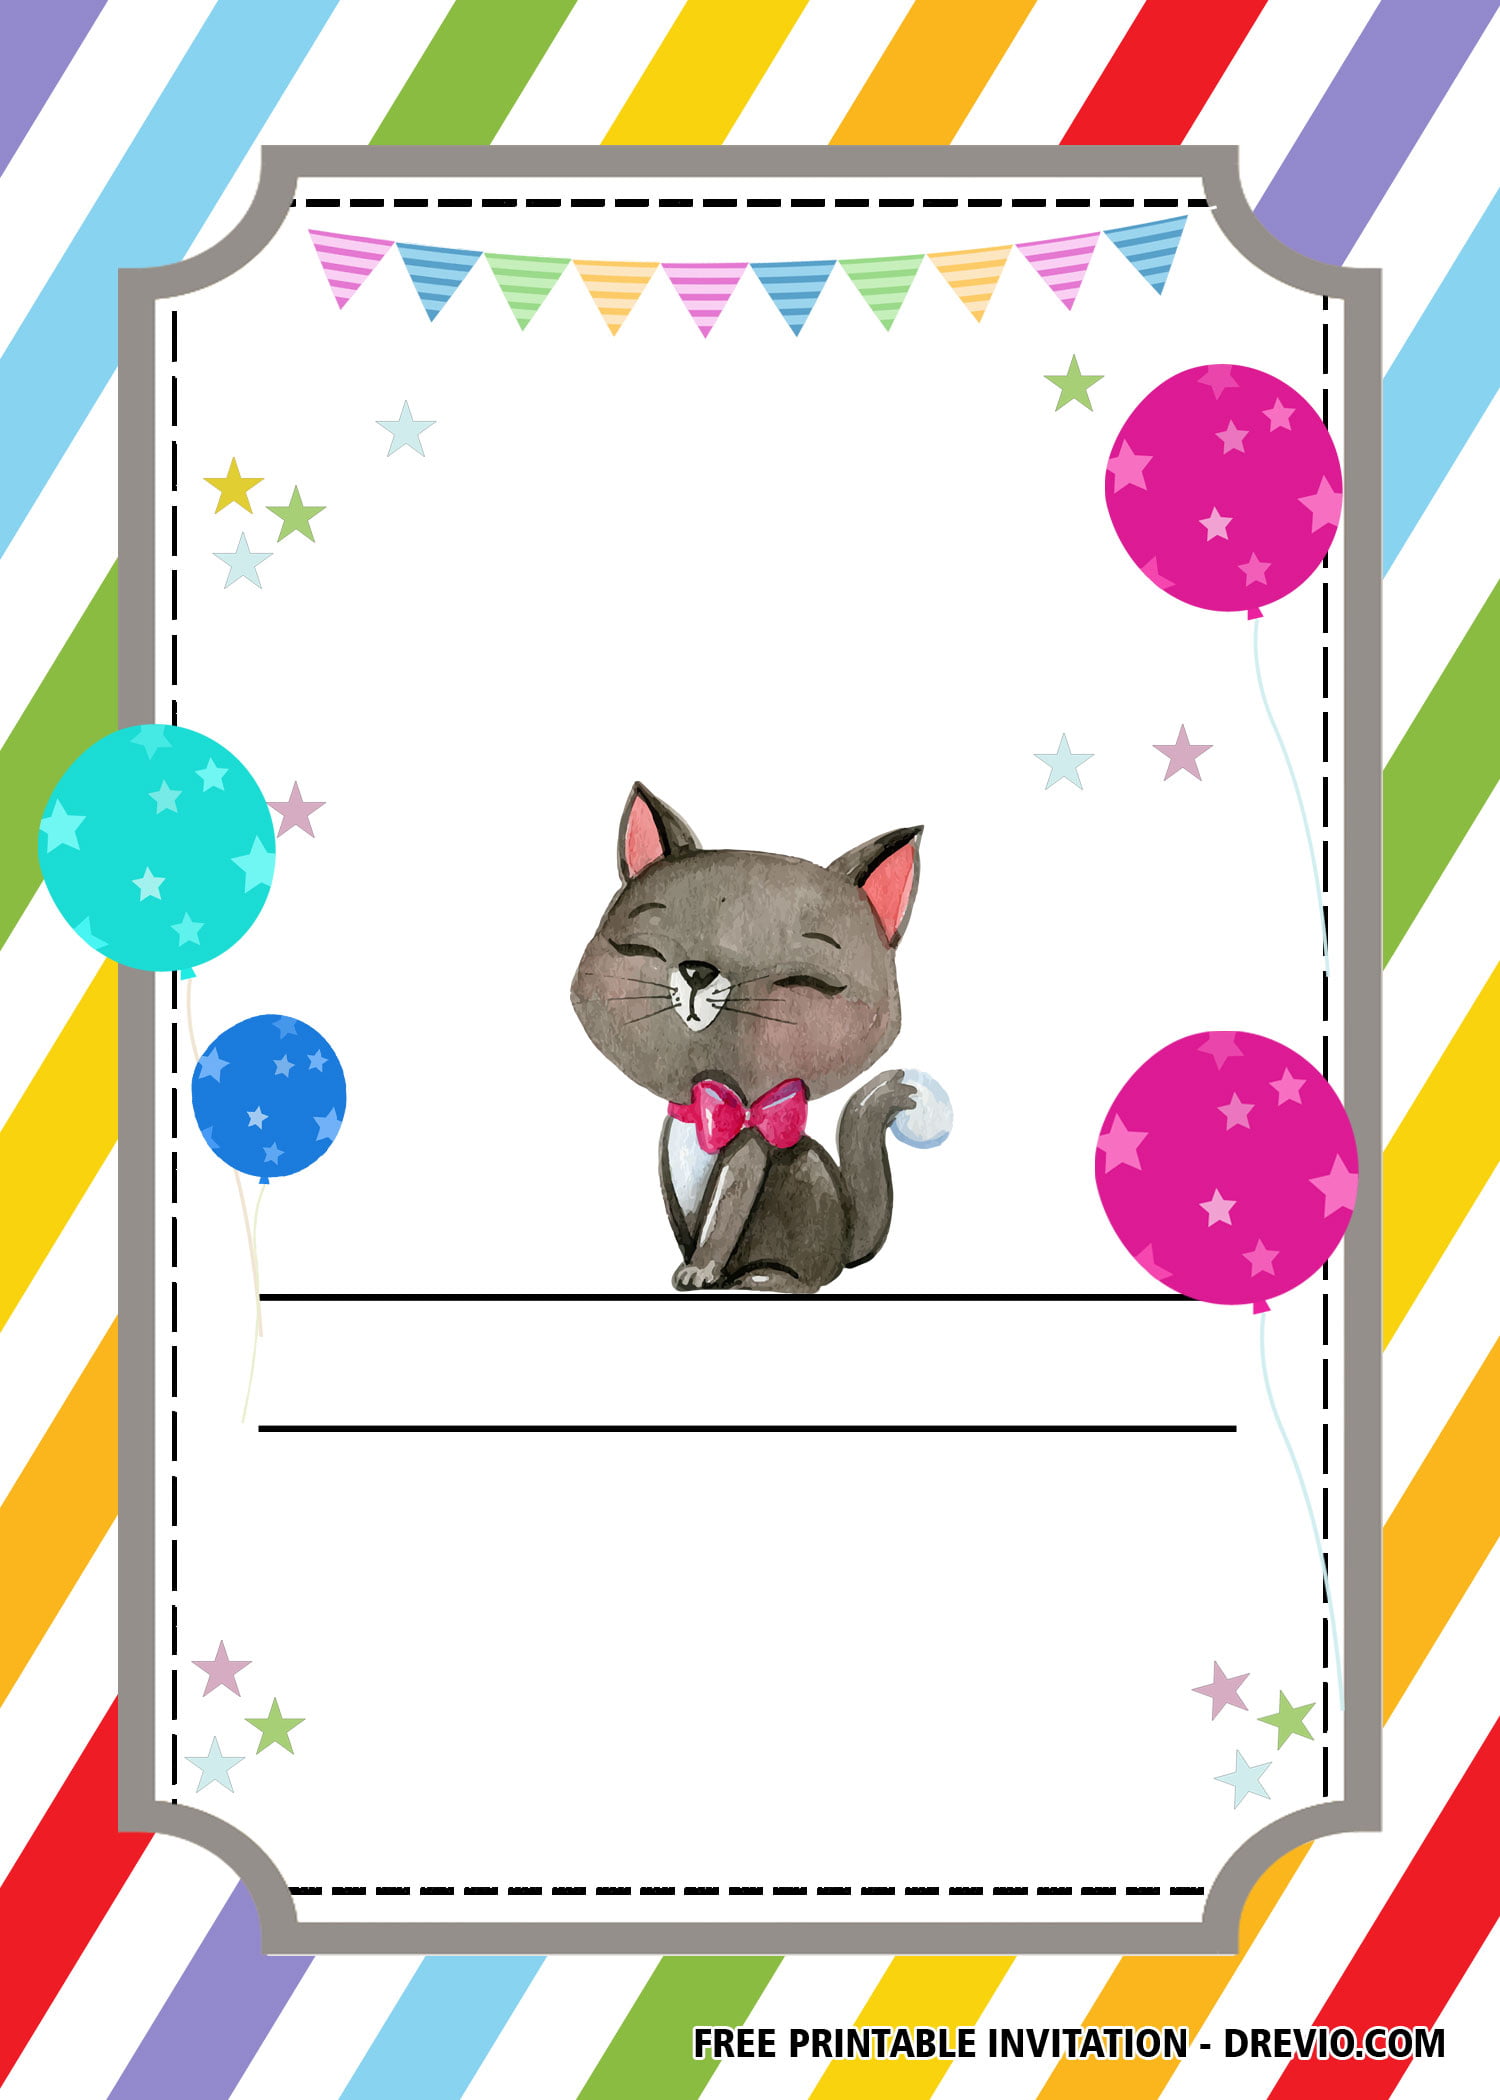 FREE Printable Cat Party Invitation TemplatesFREE PRINTABLE Birthday